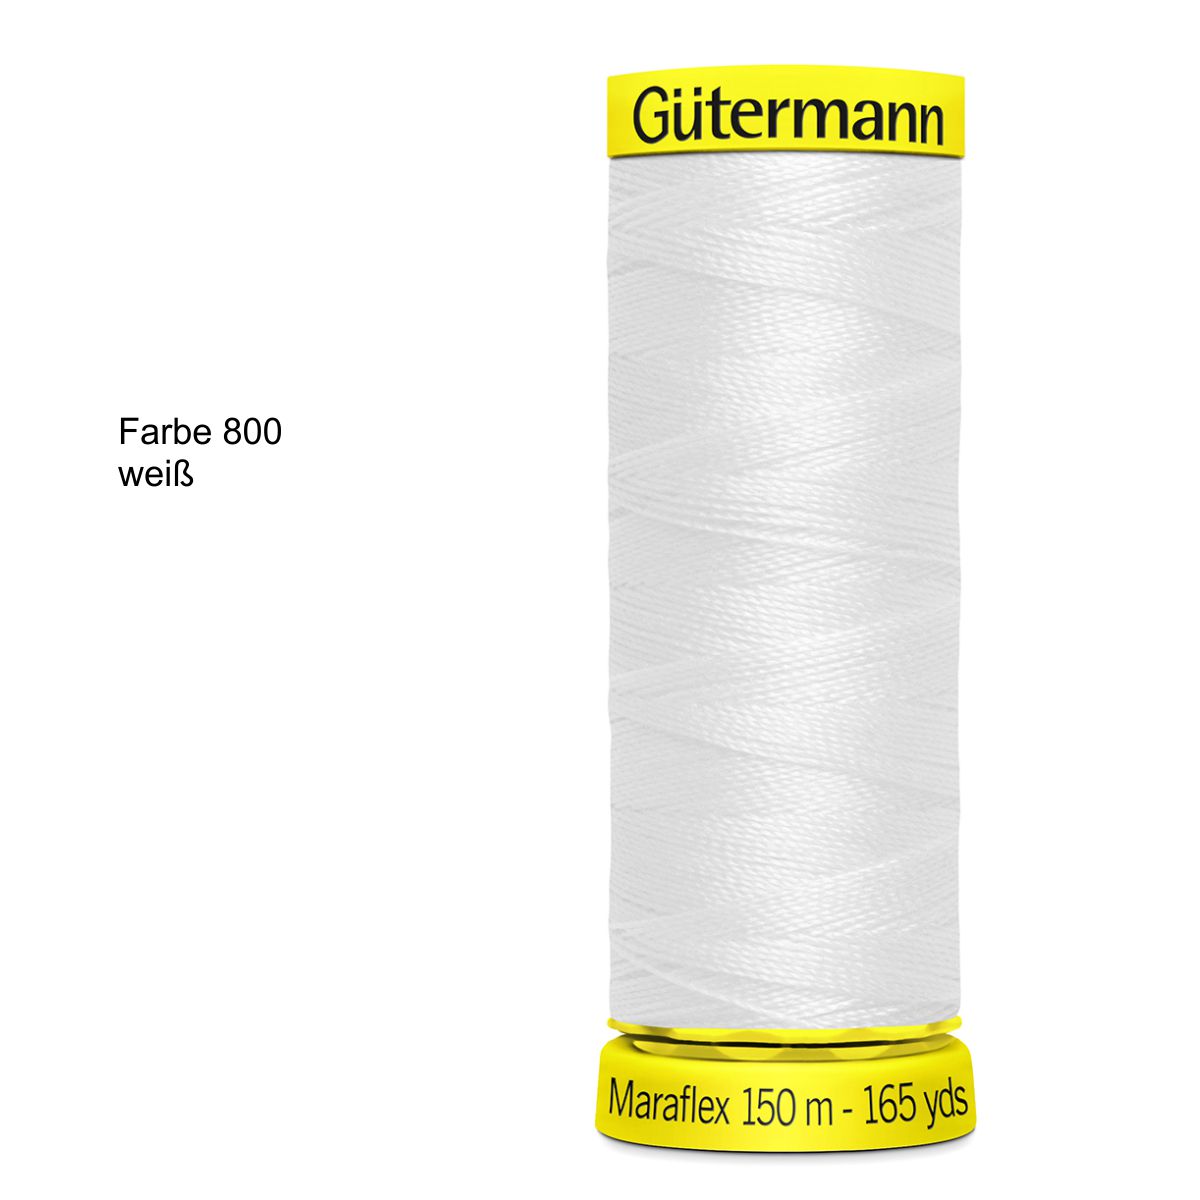 Gütermann Maraflex Elastic- Nähgarn 150m Farbe 800 weiß